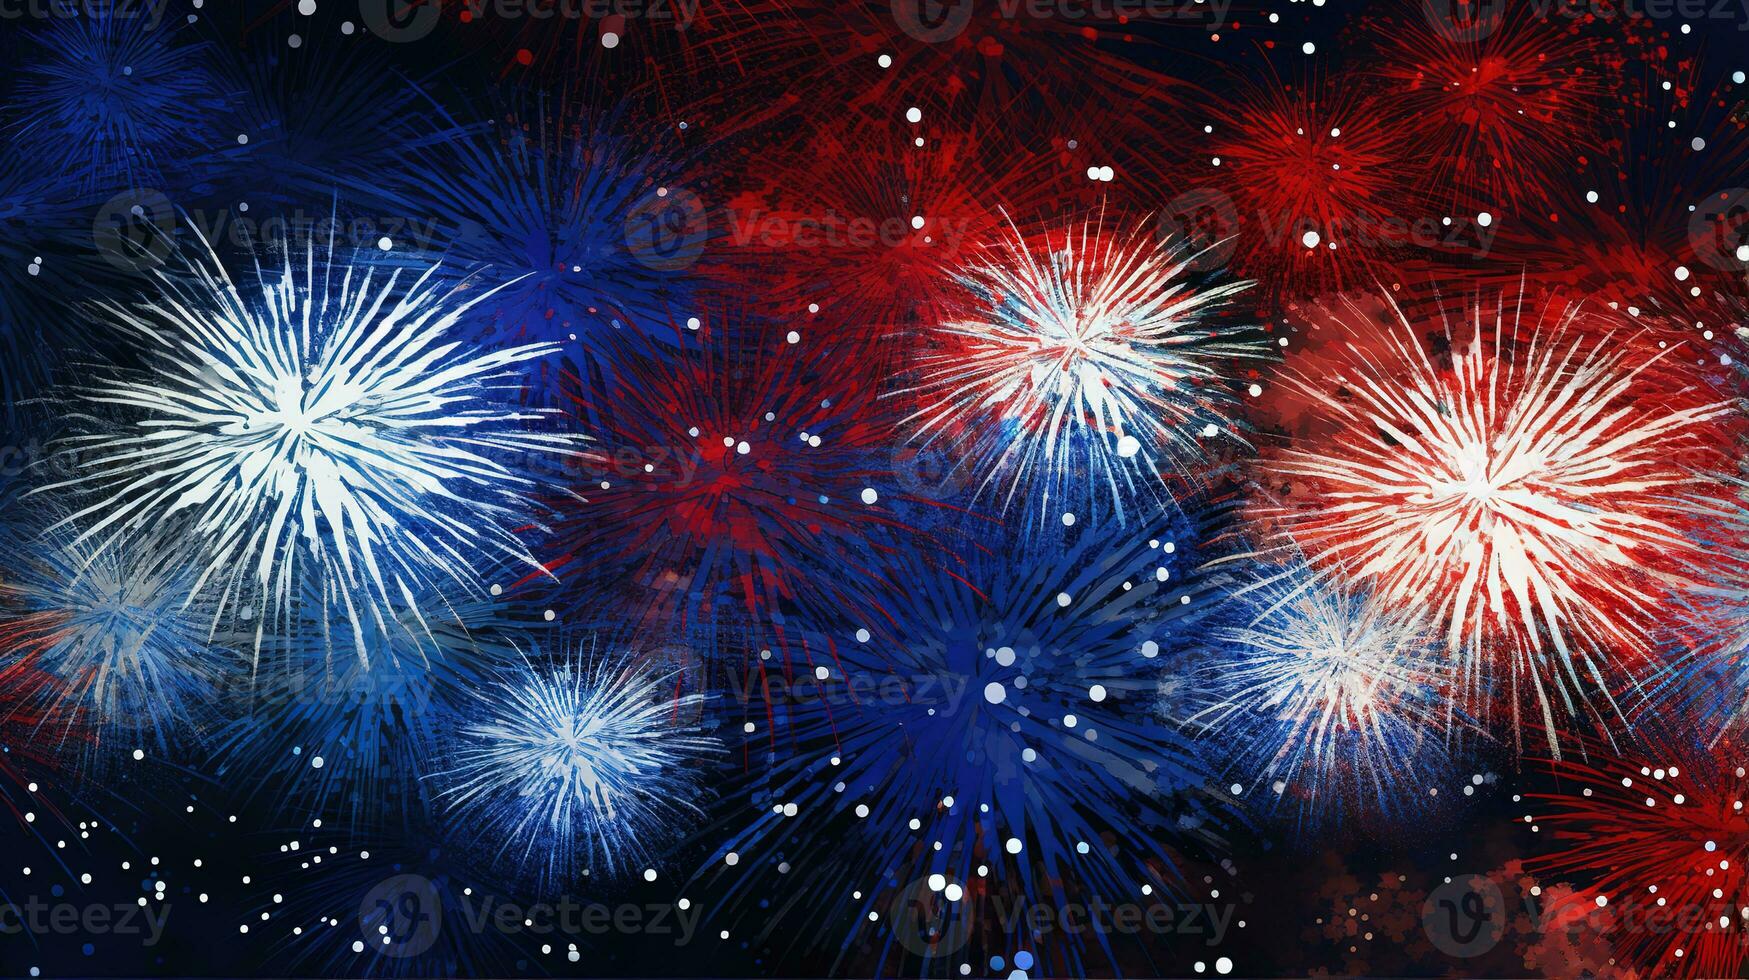 sprankelend rood blauw wit viering vuurwerk foto